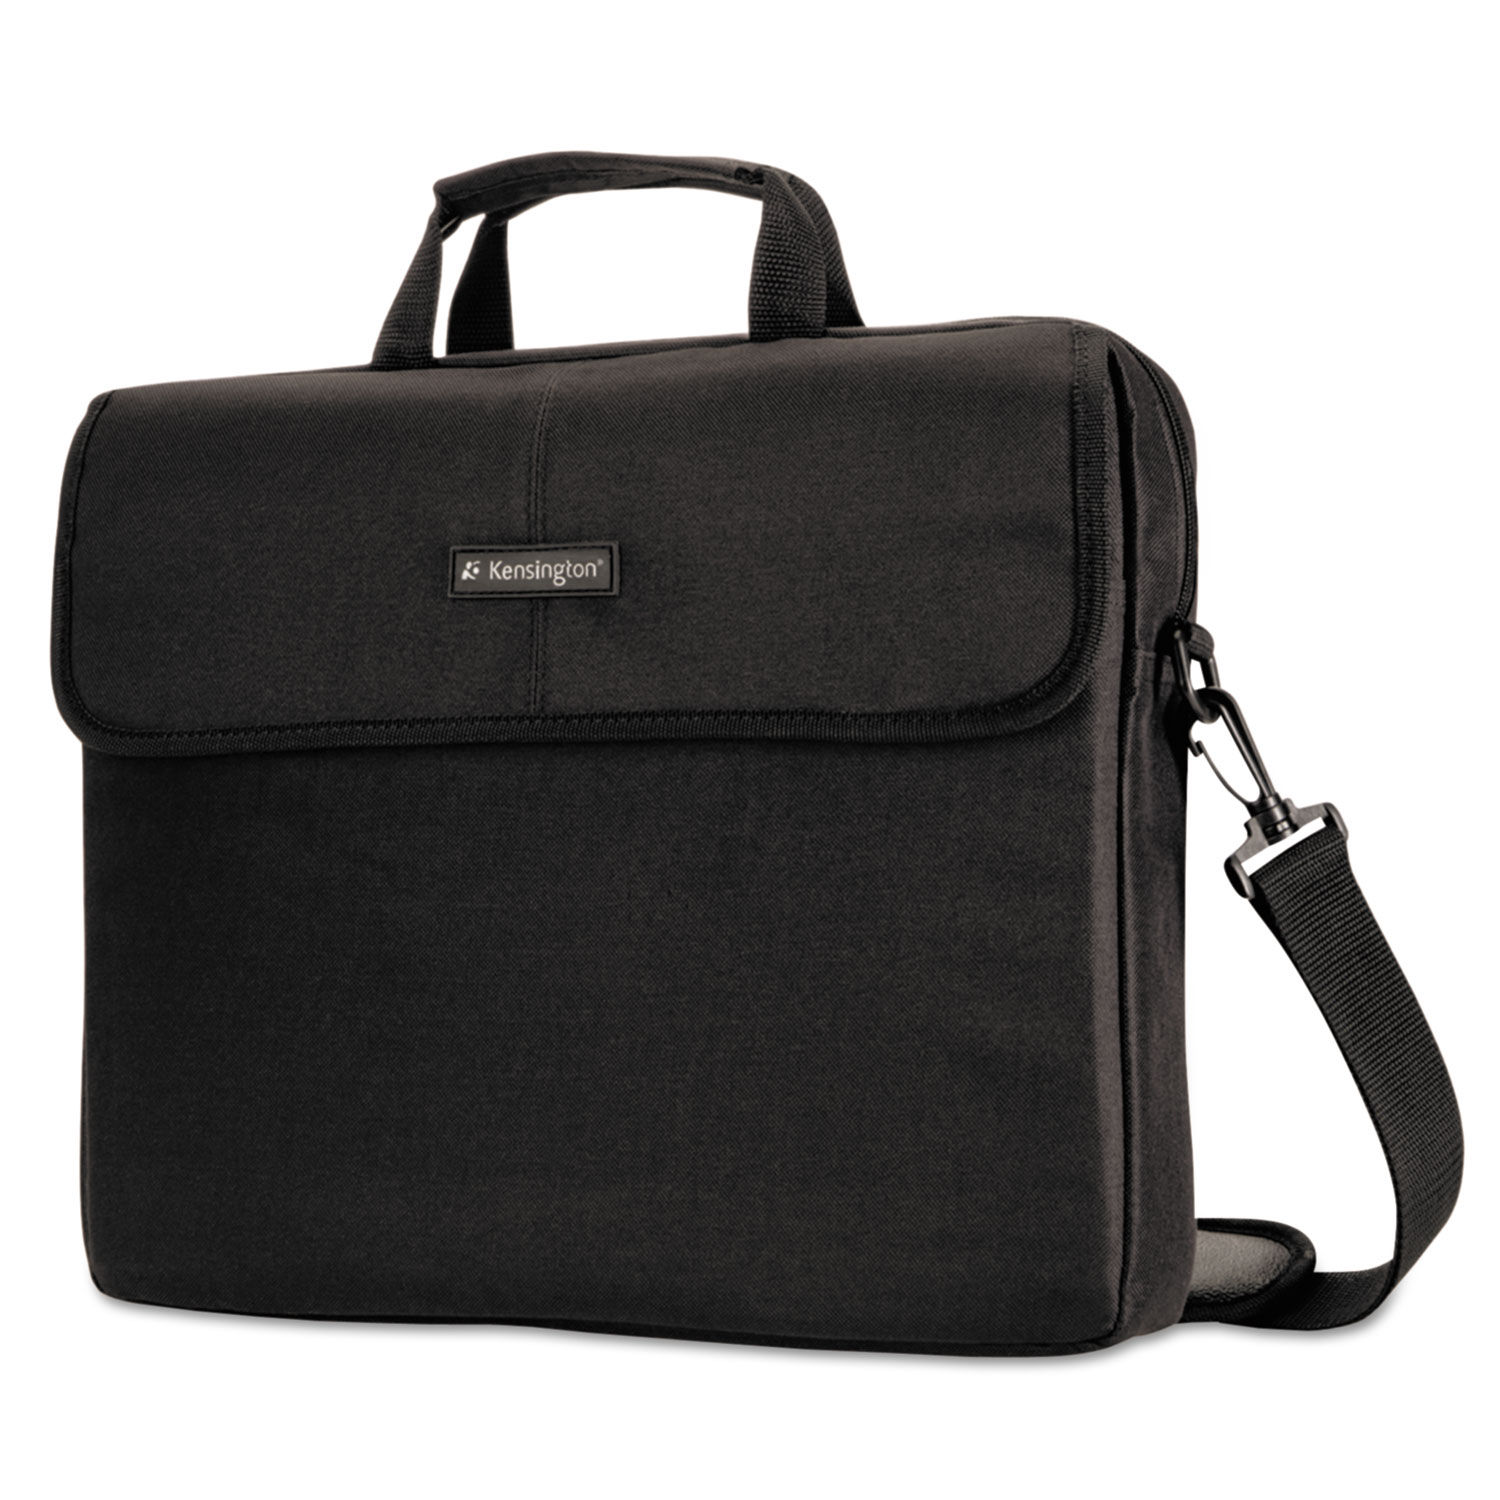 Simply Portable Padded Laptop Sleeve By Kensington® Kmw62562